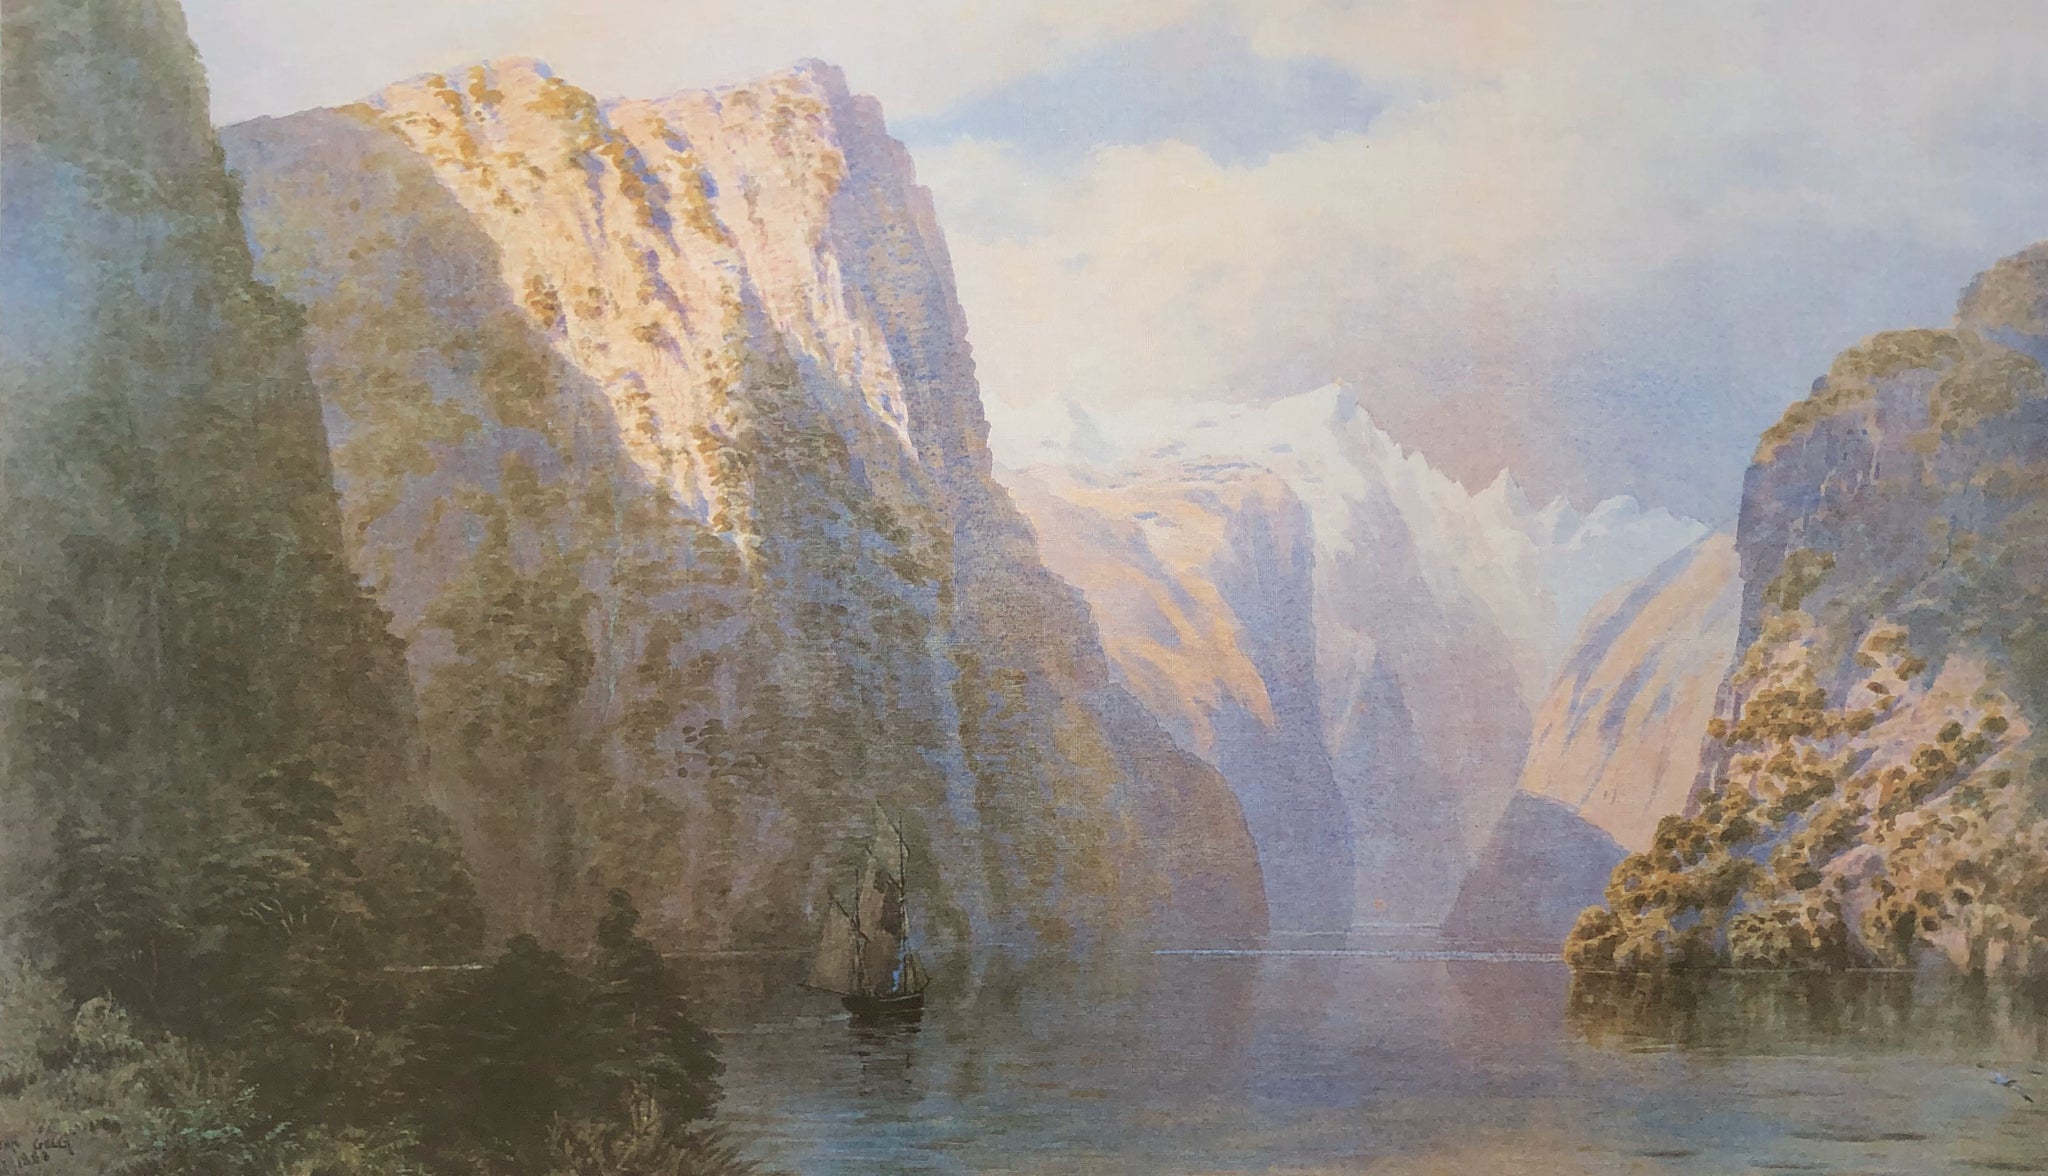 "Mt. Sheerdown from Milford Sound", 1883 - John Gully